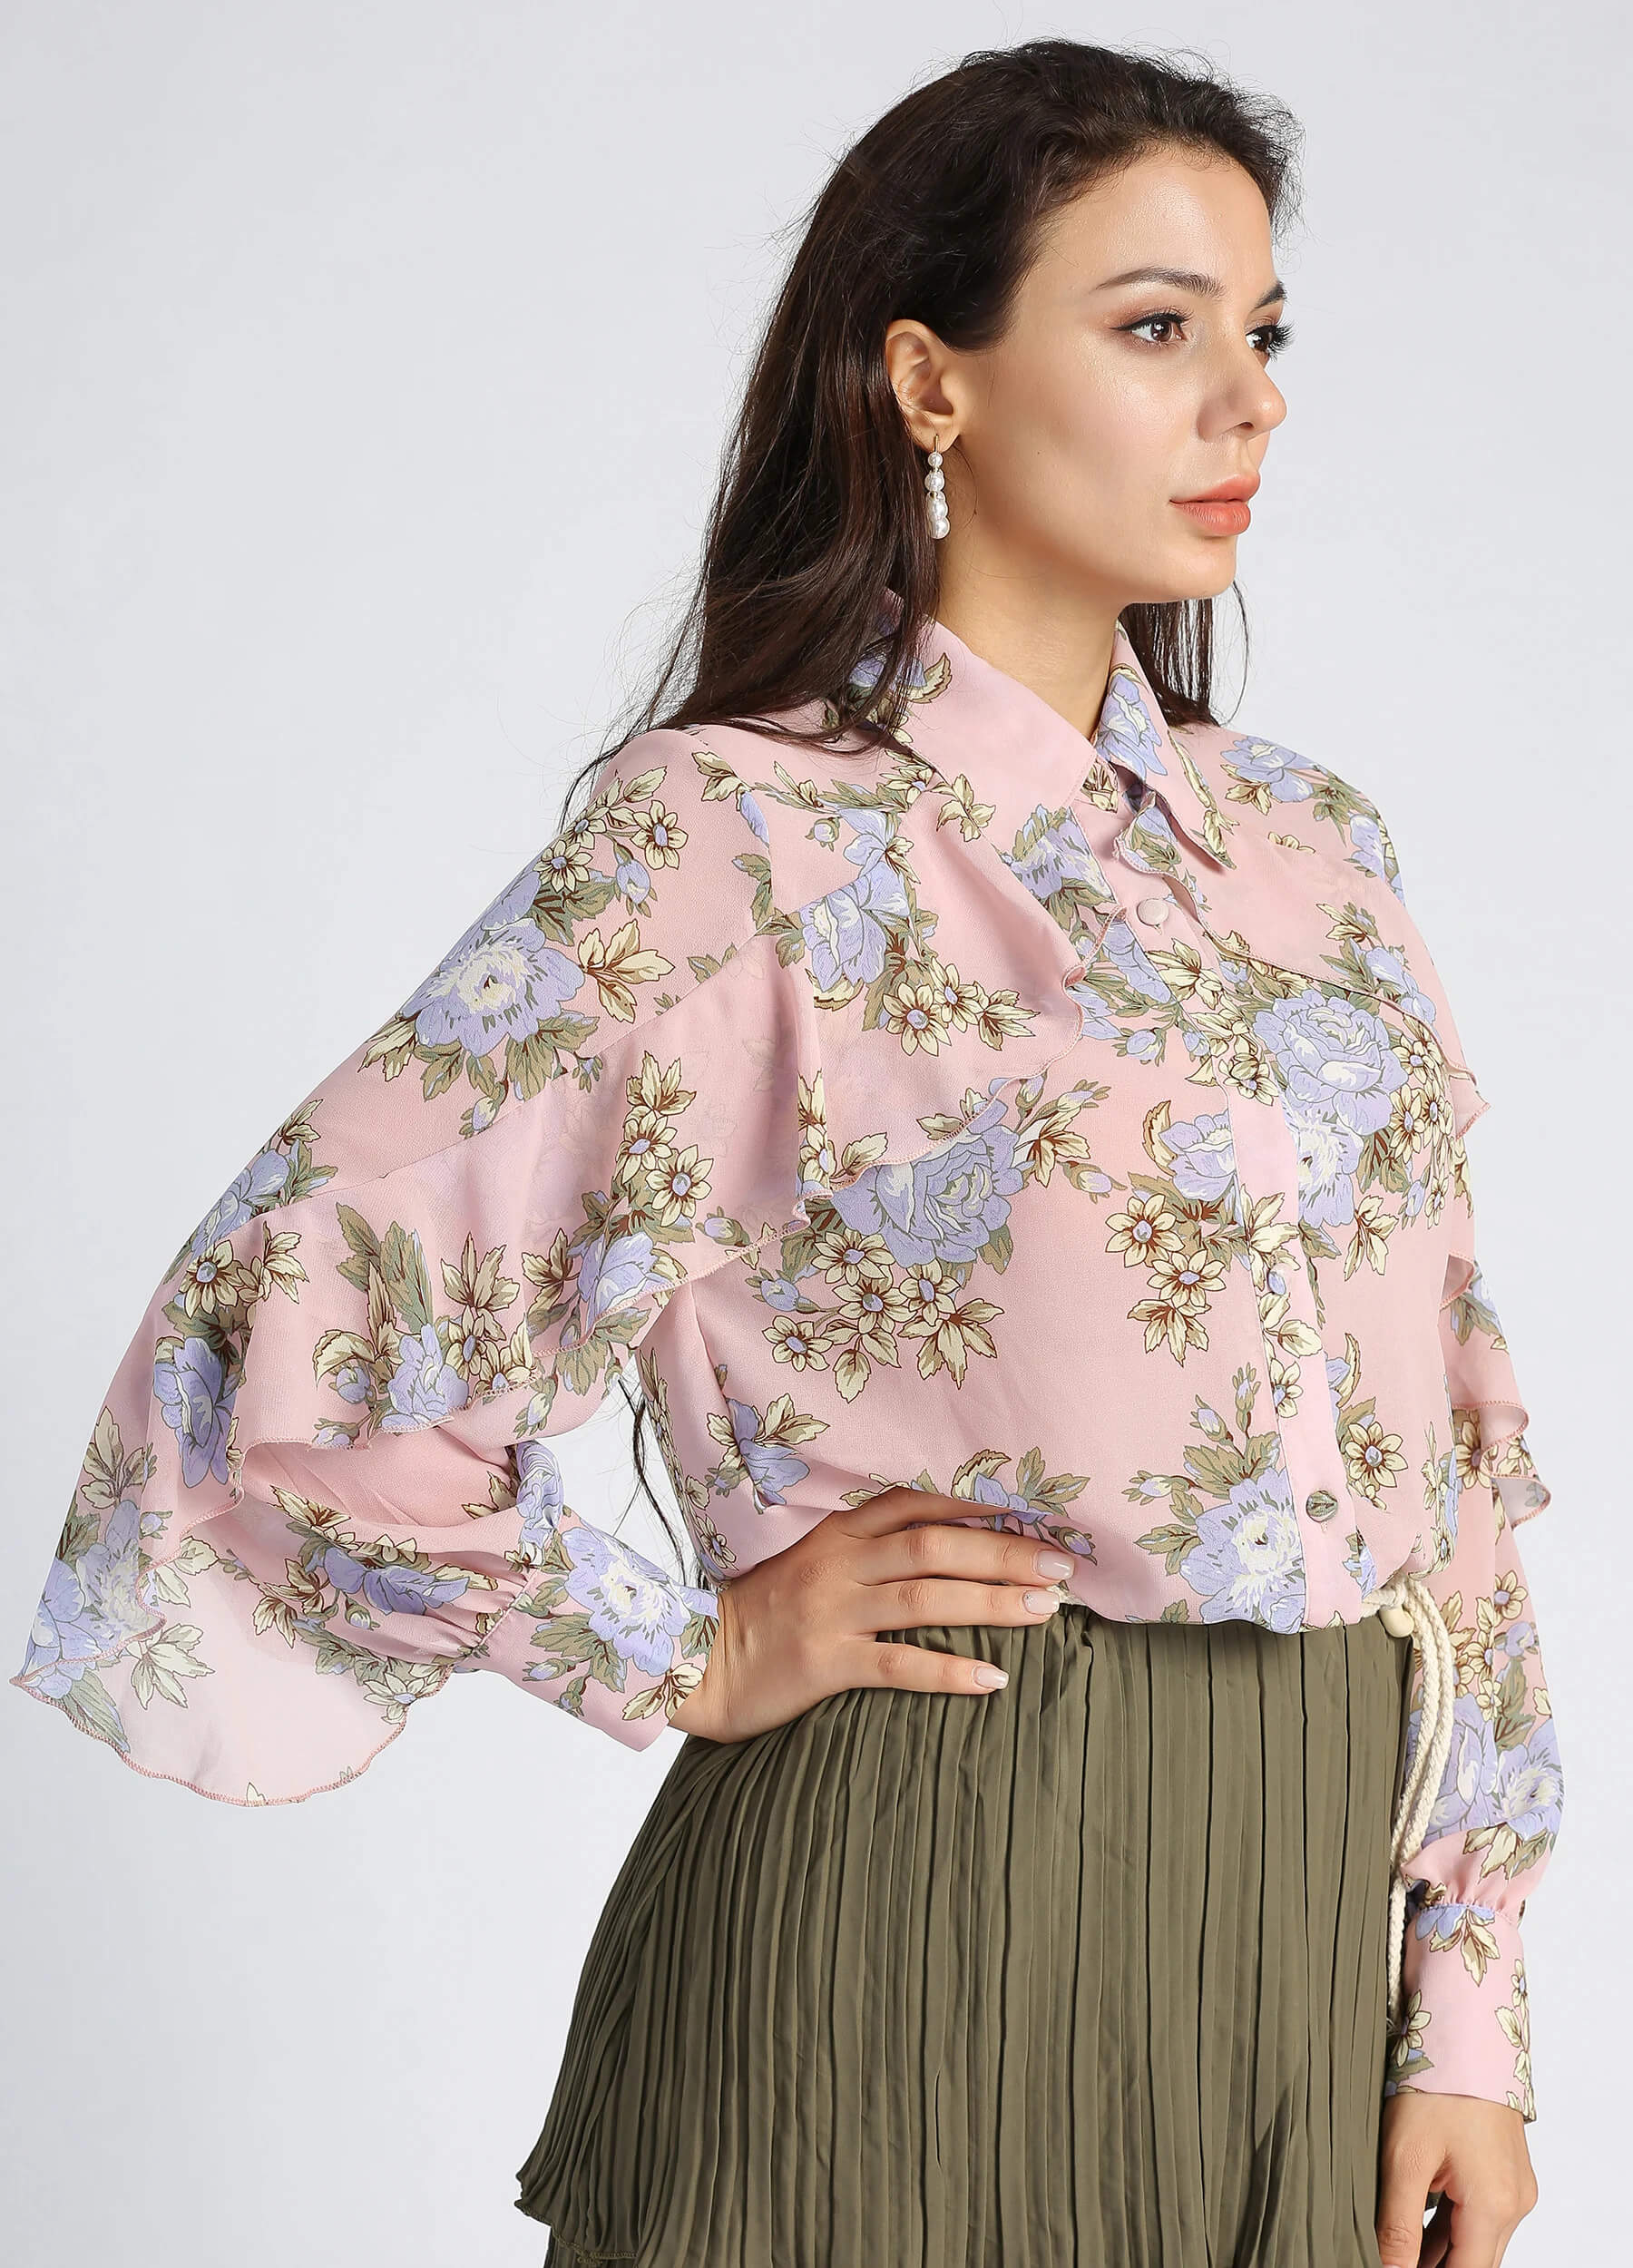 MECALA Women's Floral Print Long Sleeve Collar Button Front Ruffled Trim Blouse-Pink